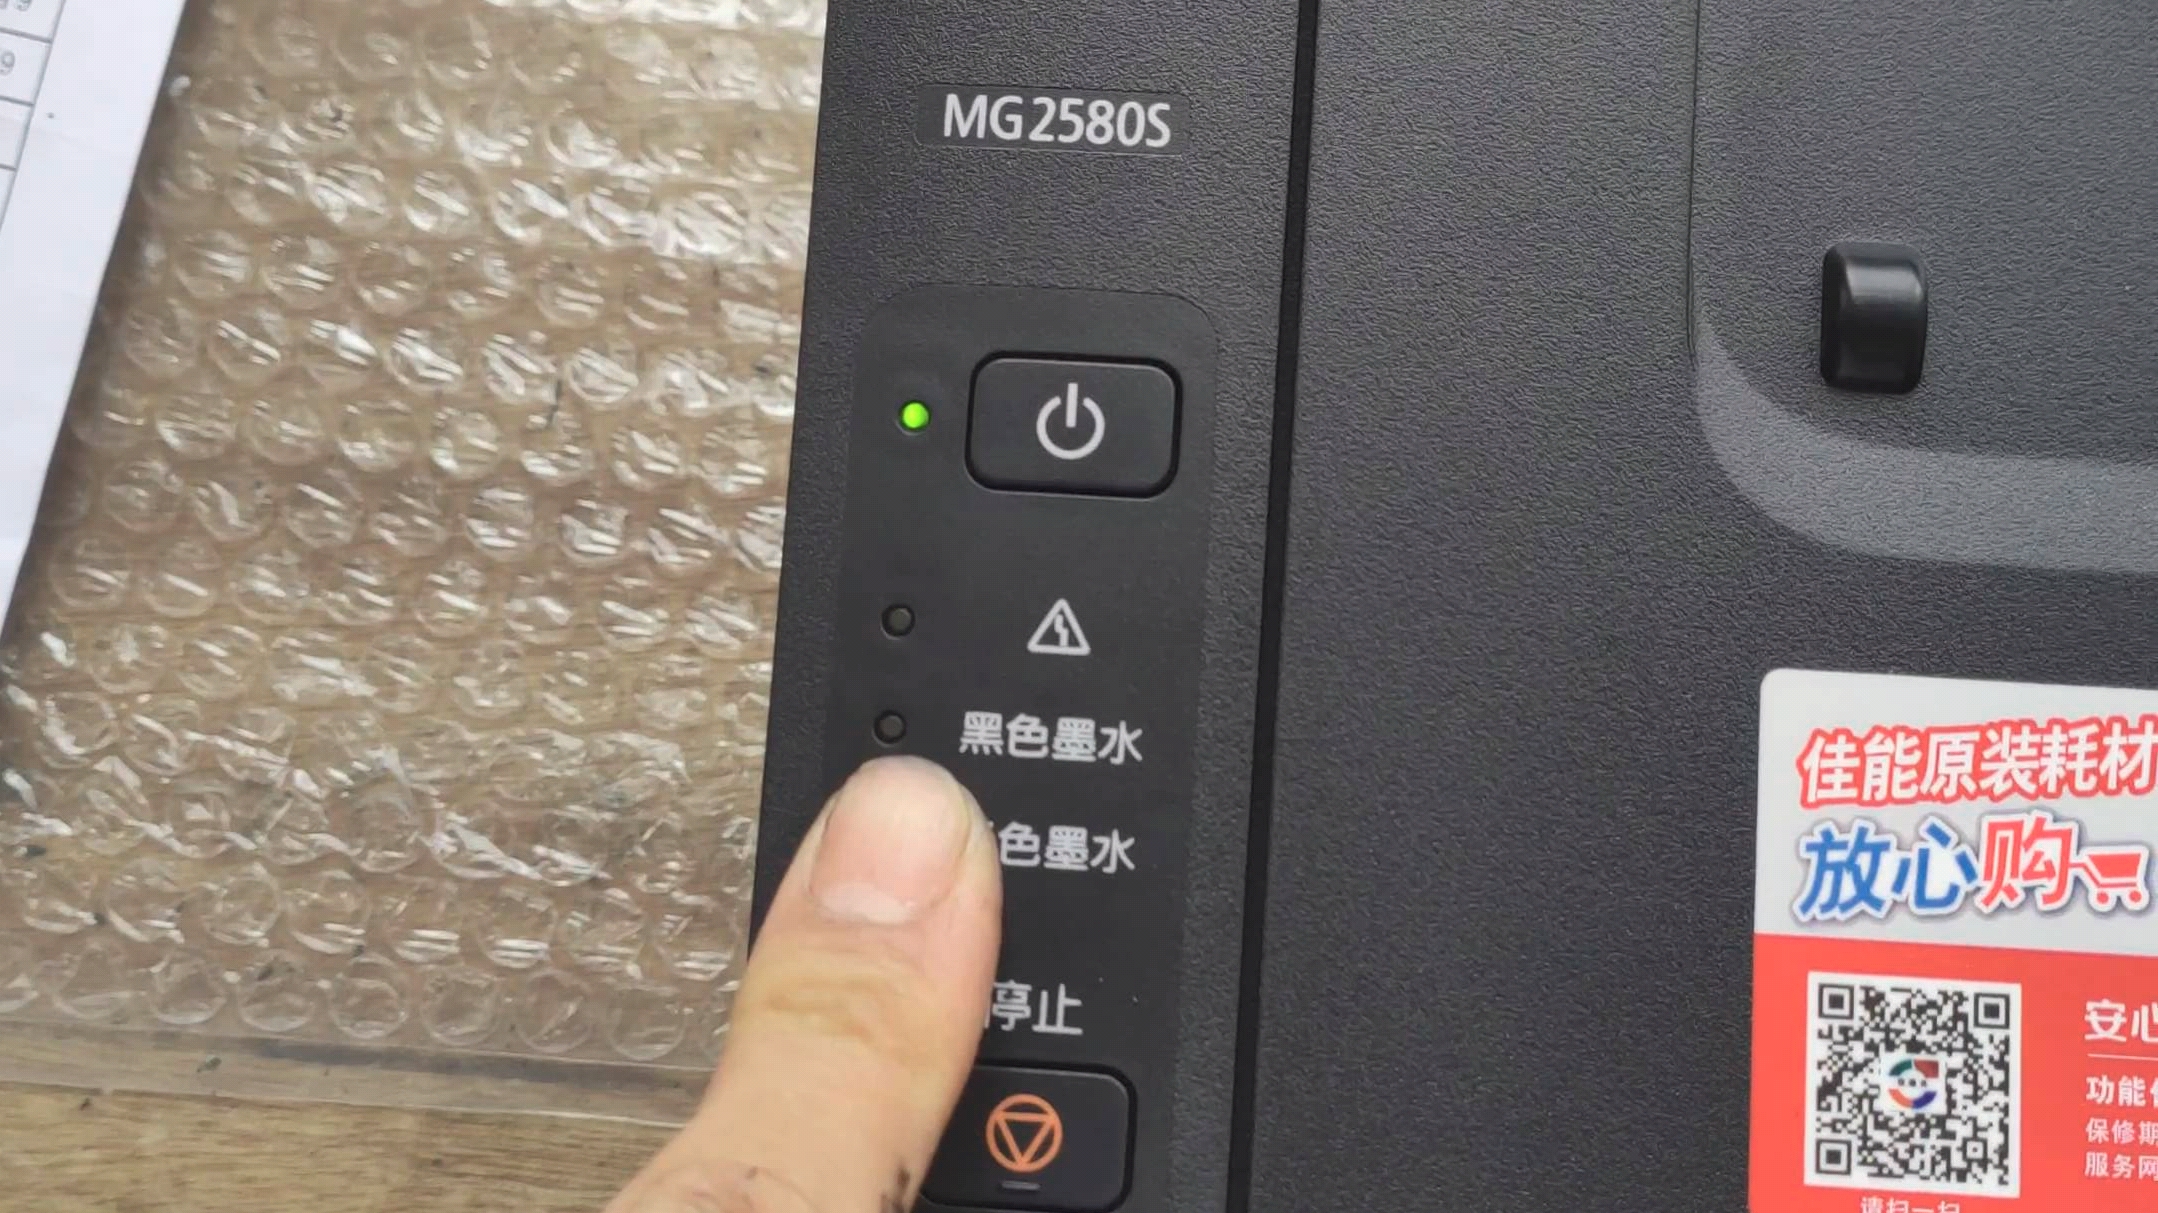 MG2580电脑报错5012，三角灯和电源交替闪烁22次